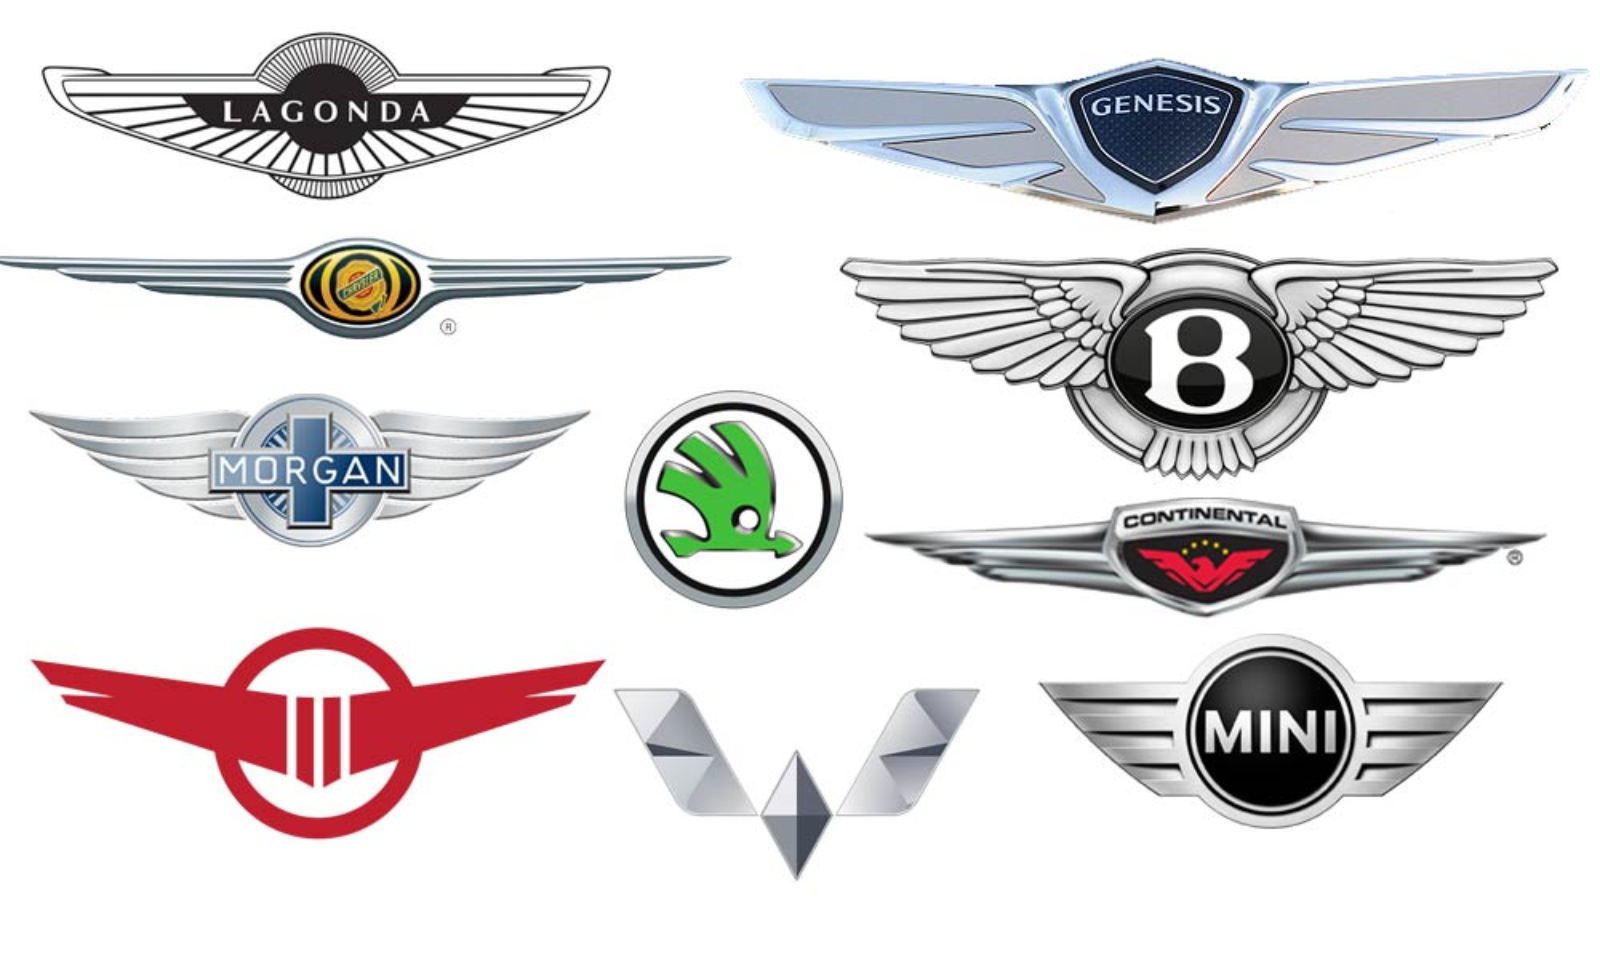 car company logos with names